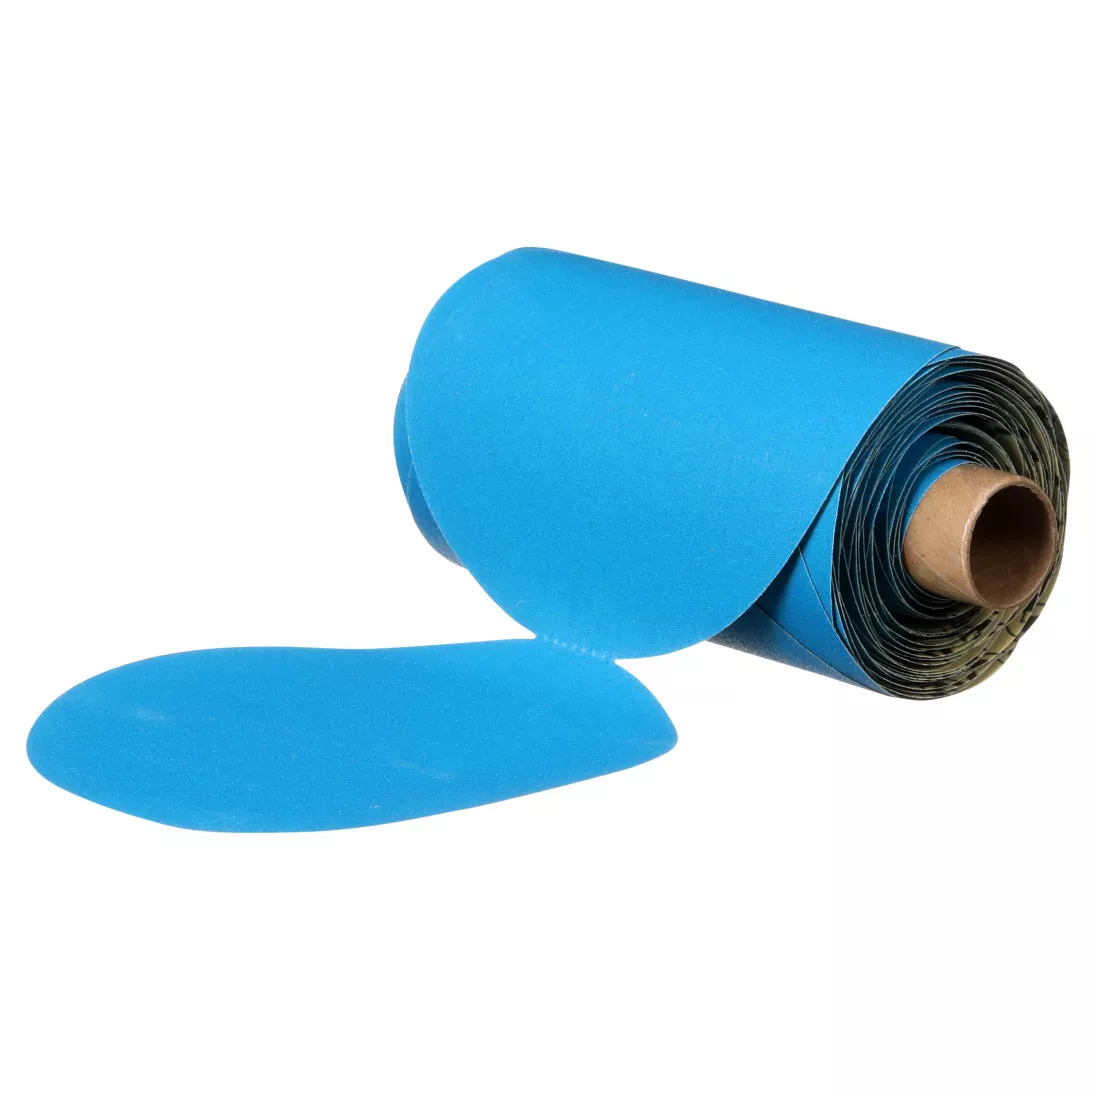 3M™ Stikit™ Blue Abrasive Disc Roll, 36269, 5 in, 220 grade, No Hole, 100 discs per roll, 5 rolls per case